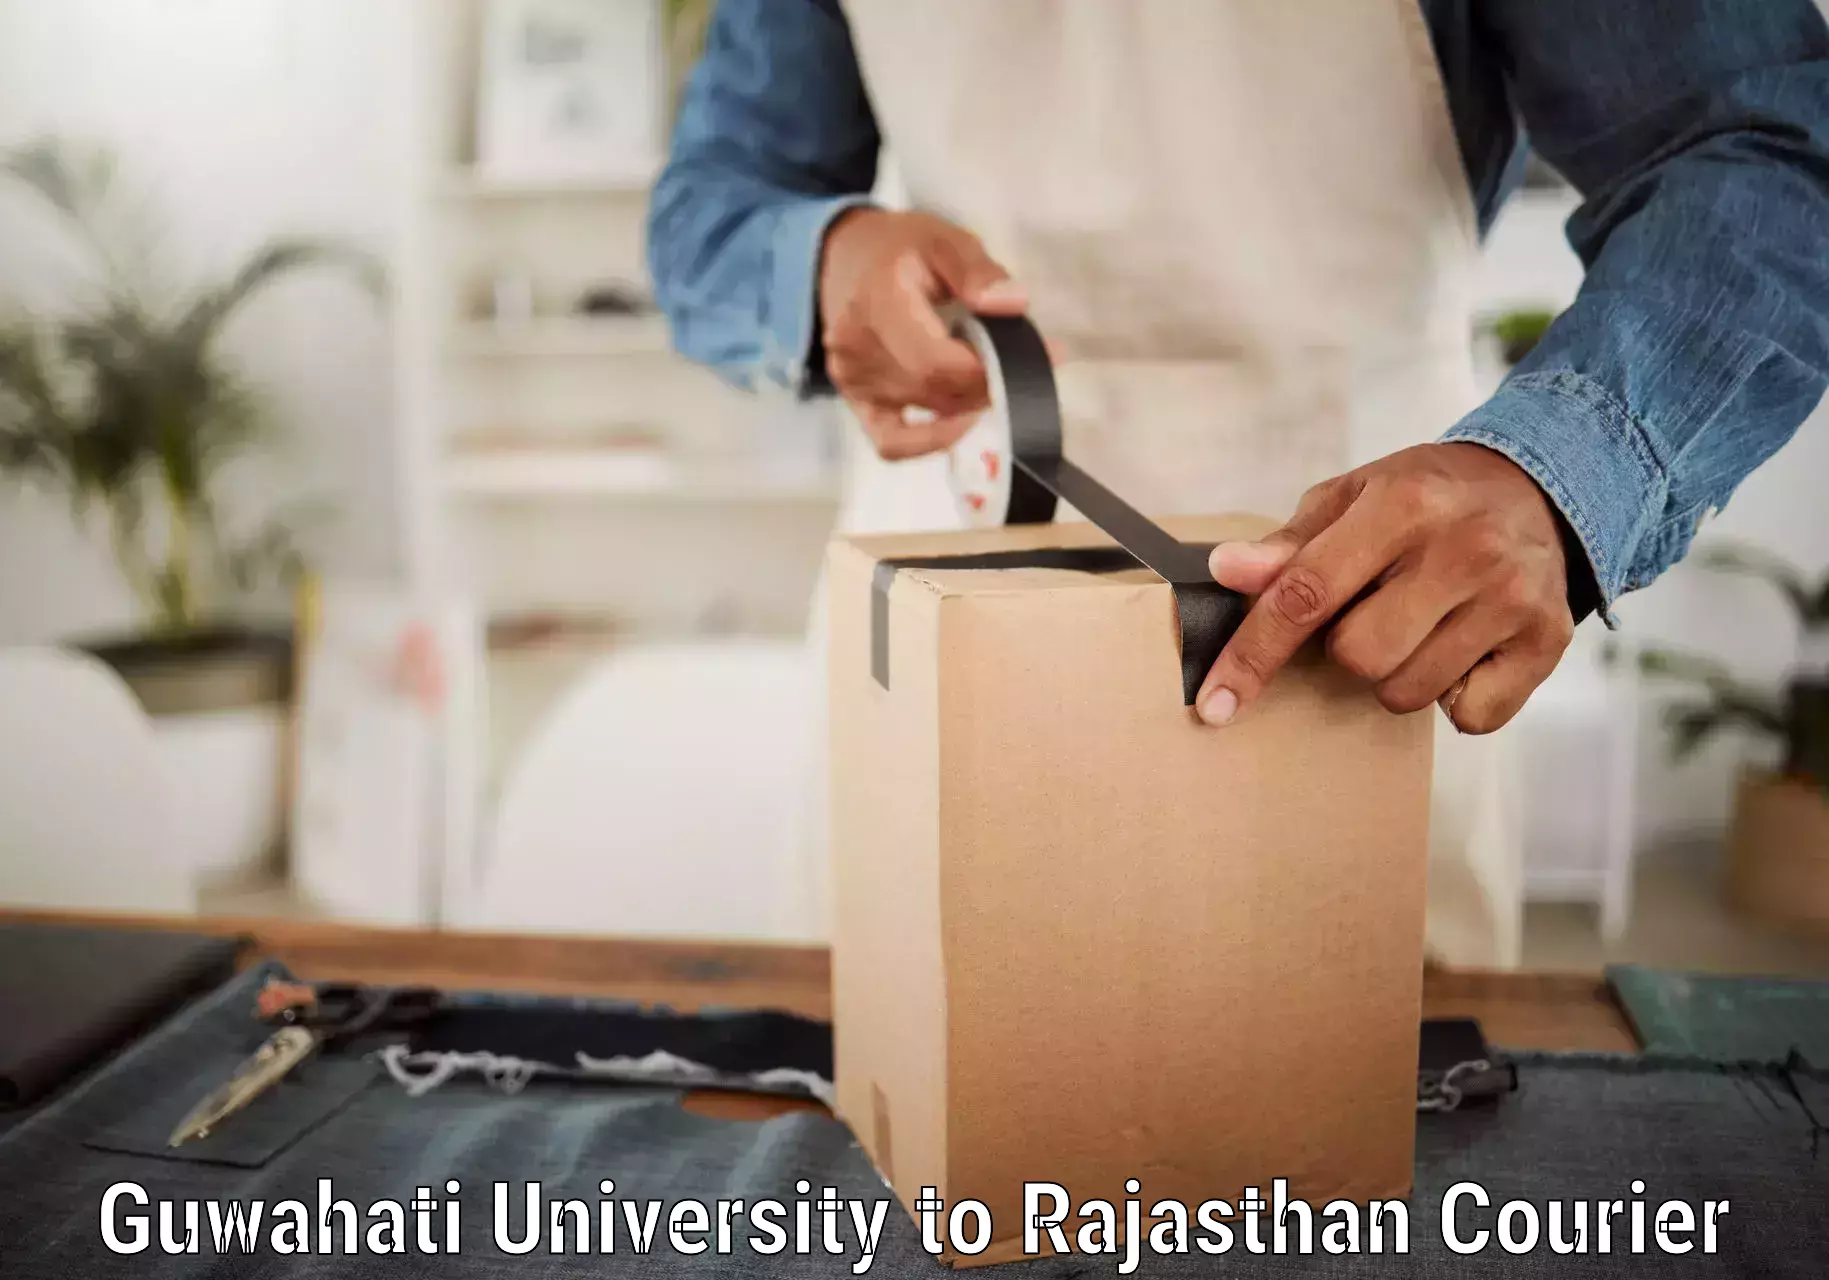 Express logistics providers Guwahati University to Rajasthan